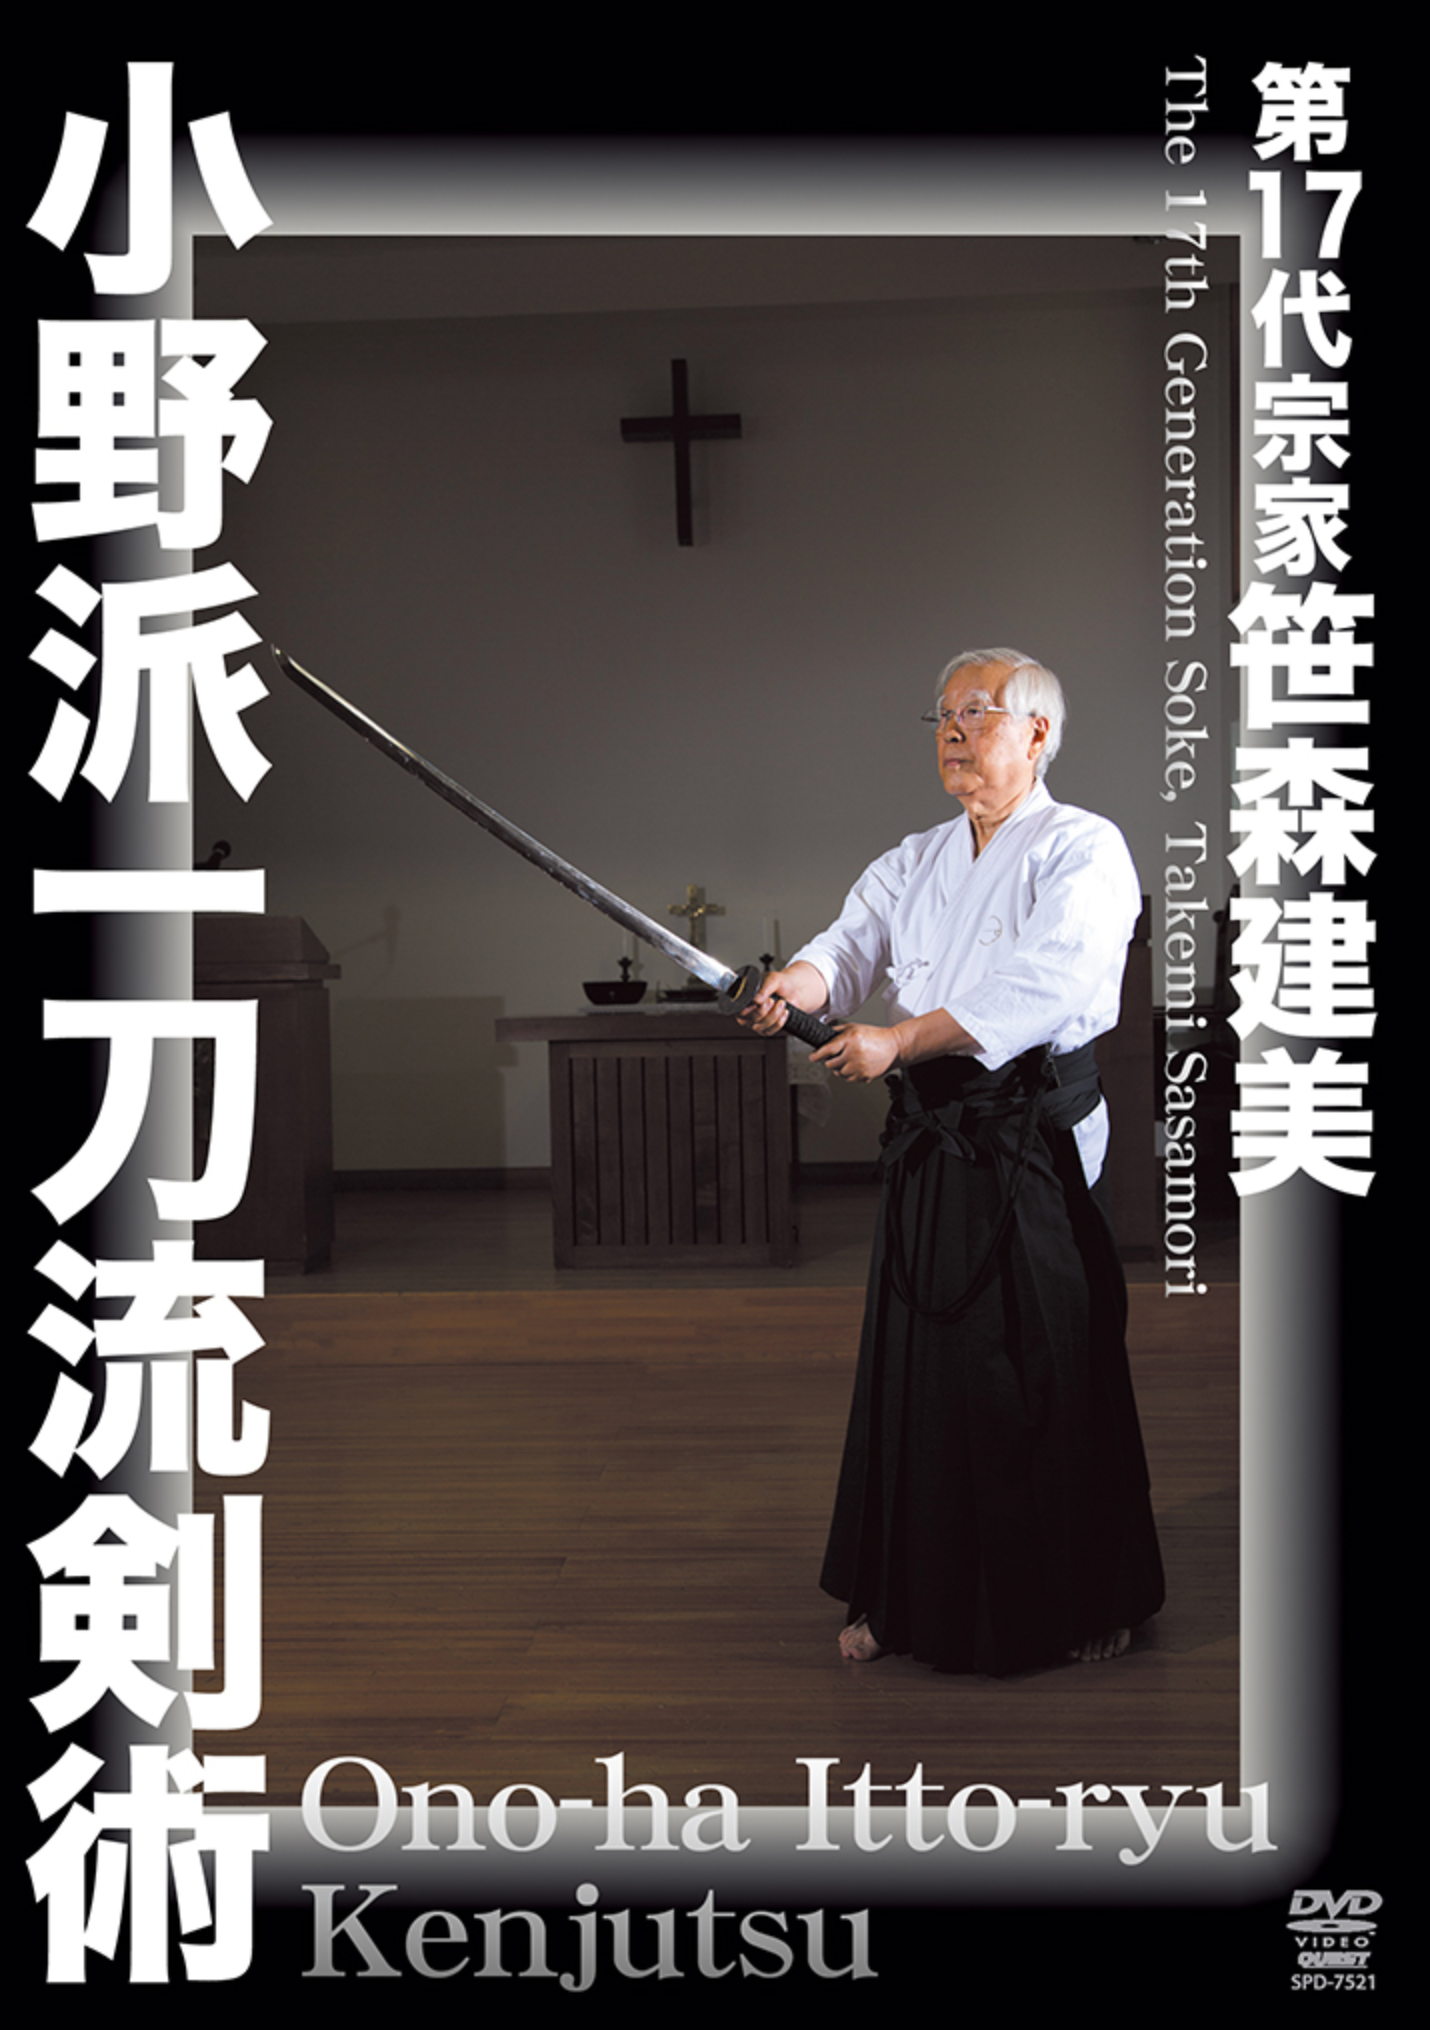 Ono Ha Itto Ryu Kenjutsu DVD with 17th Gen Soke Takemi Sasamori - Budovideos Inc